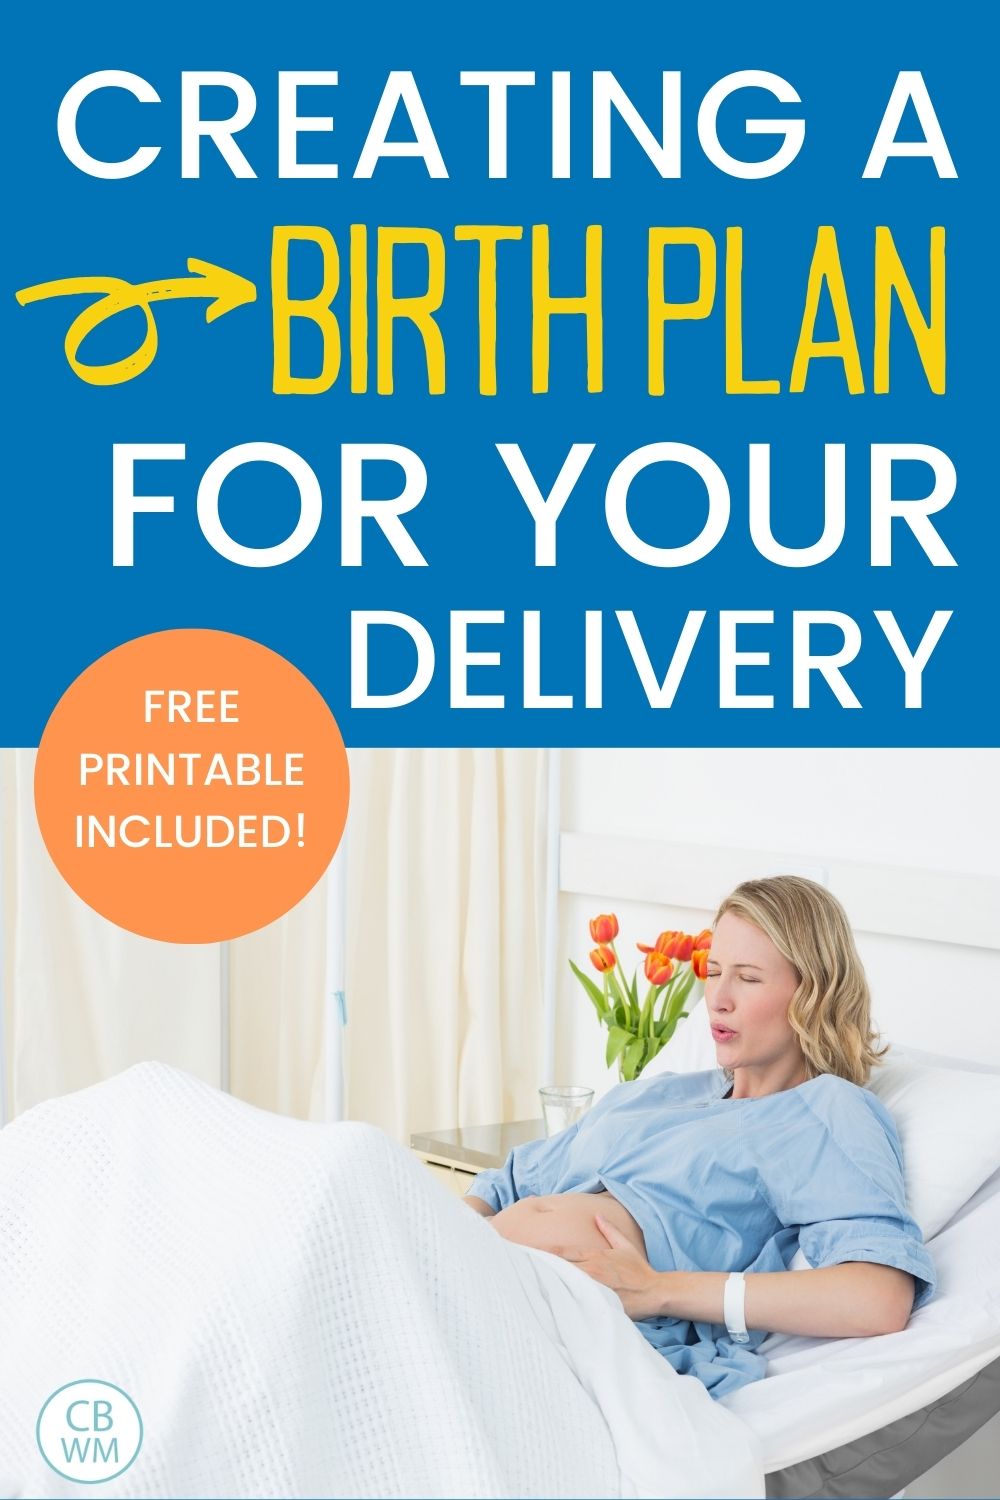 Creating a birth plan pinnable image